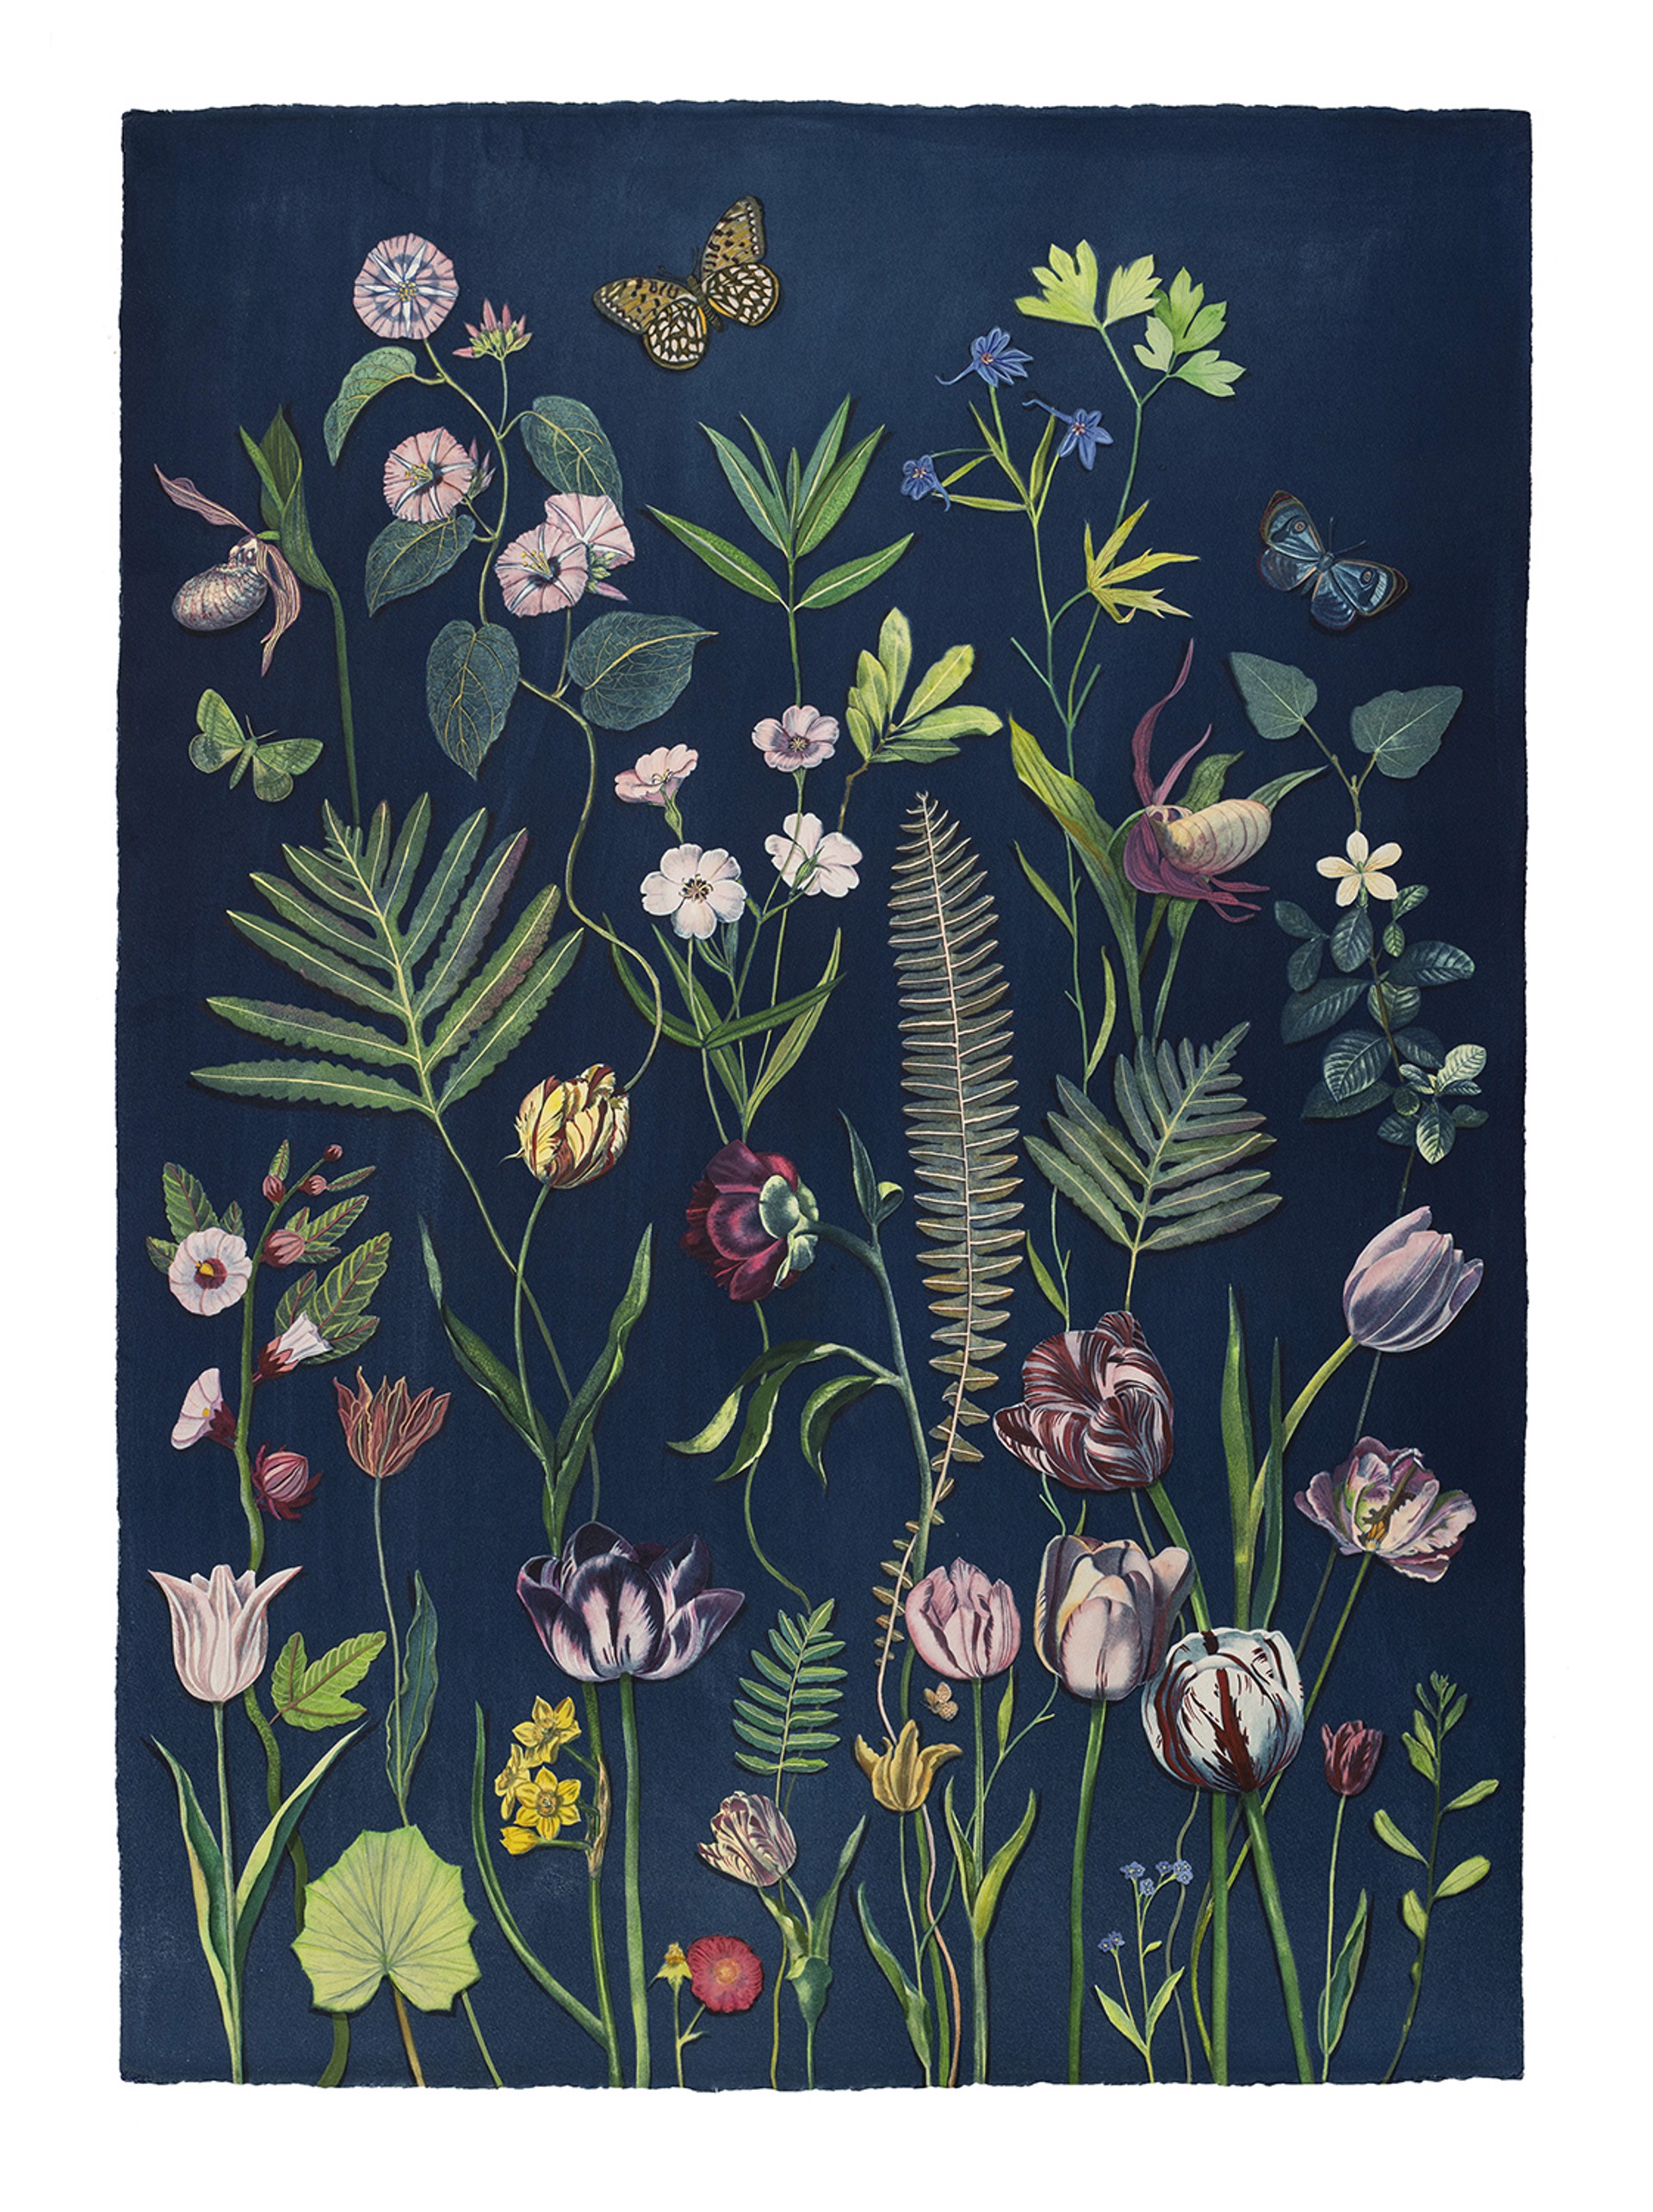 Picturesque Botany (Tulip, Fern, Morning Glory, Delphinium, Lady Slipper Orchid, Rose, Pollinators, etc.) by Julia Whitney Barnes